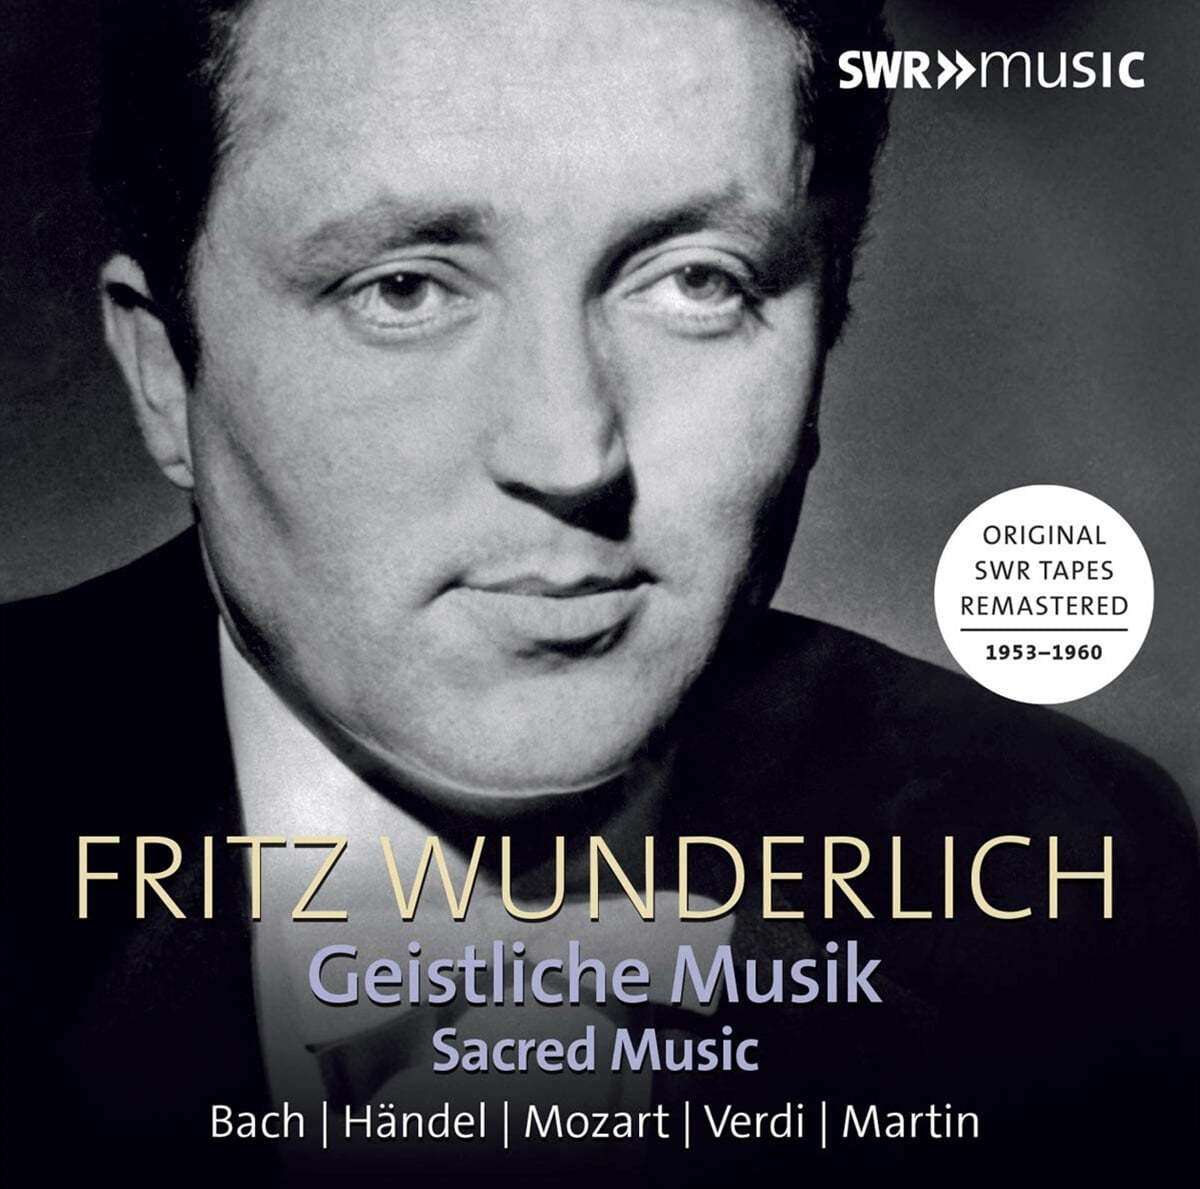 Fritz Wunderlich 프리츠 분덜리히가 부르는 종교 음악 (Sacred Music) 